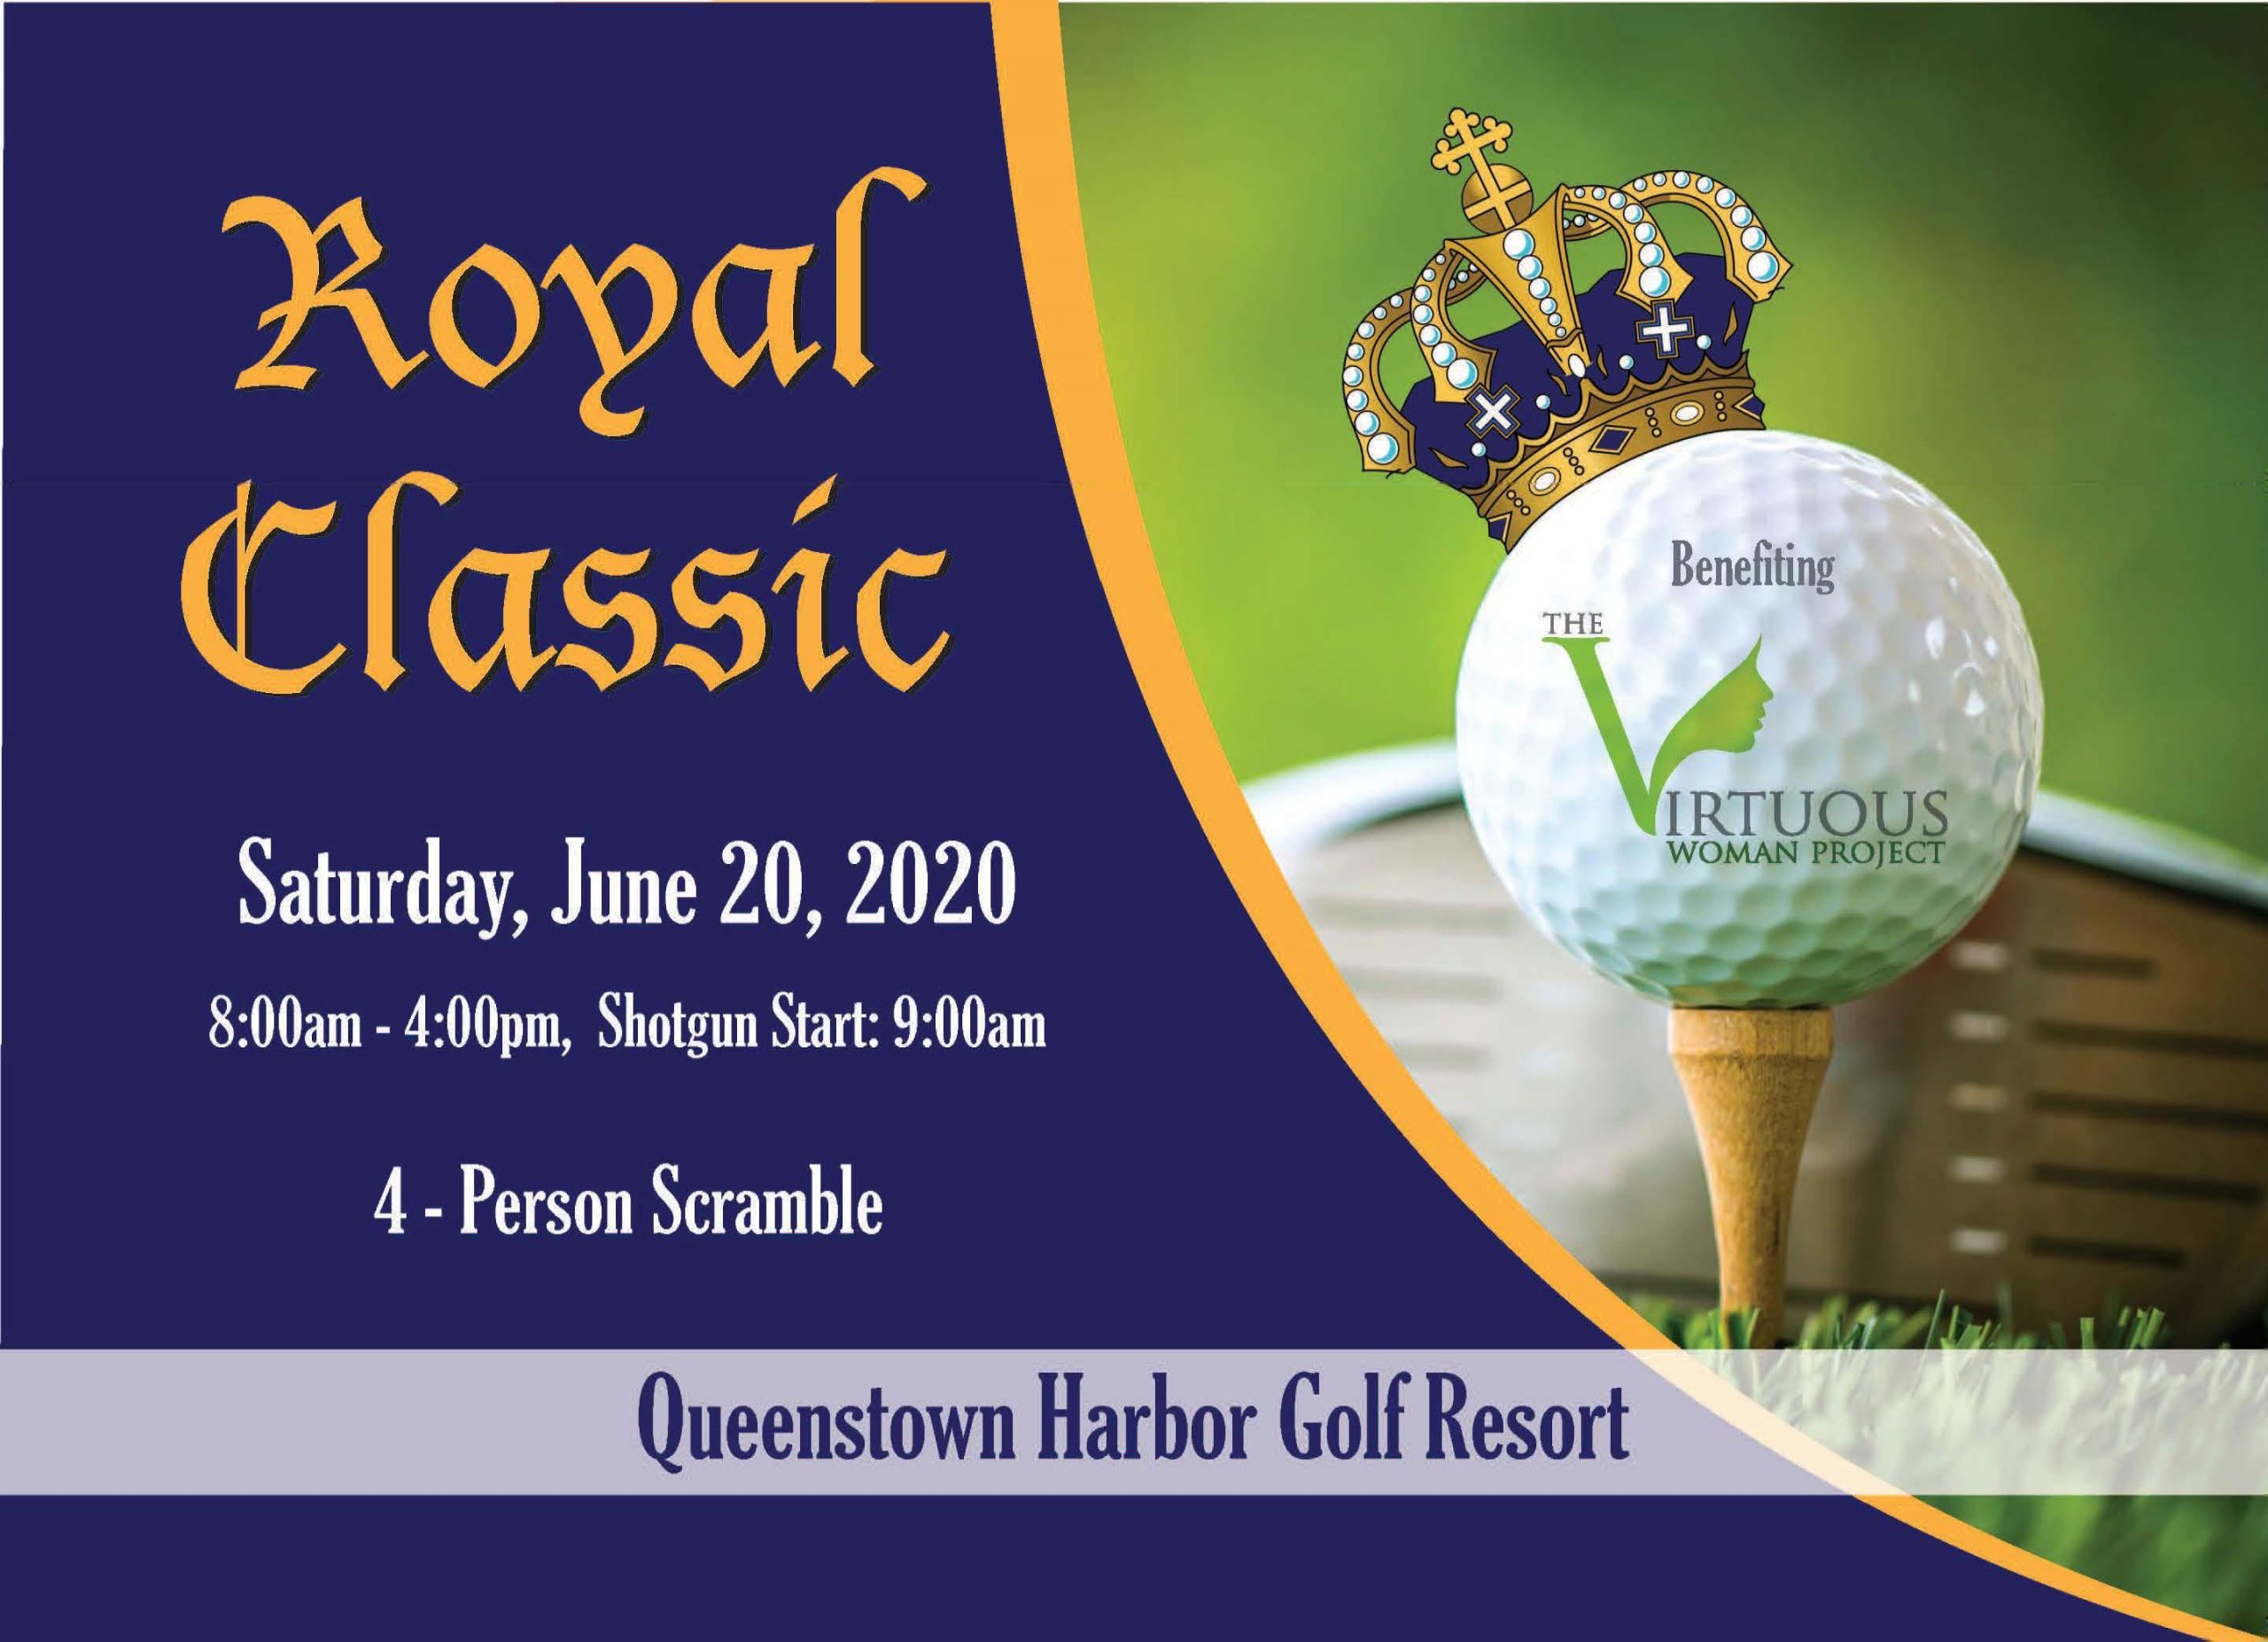 The Royal Classic Golf Tournament